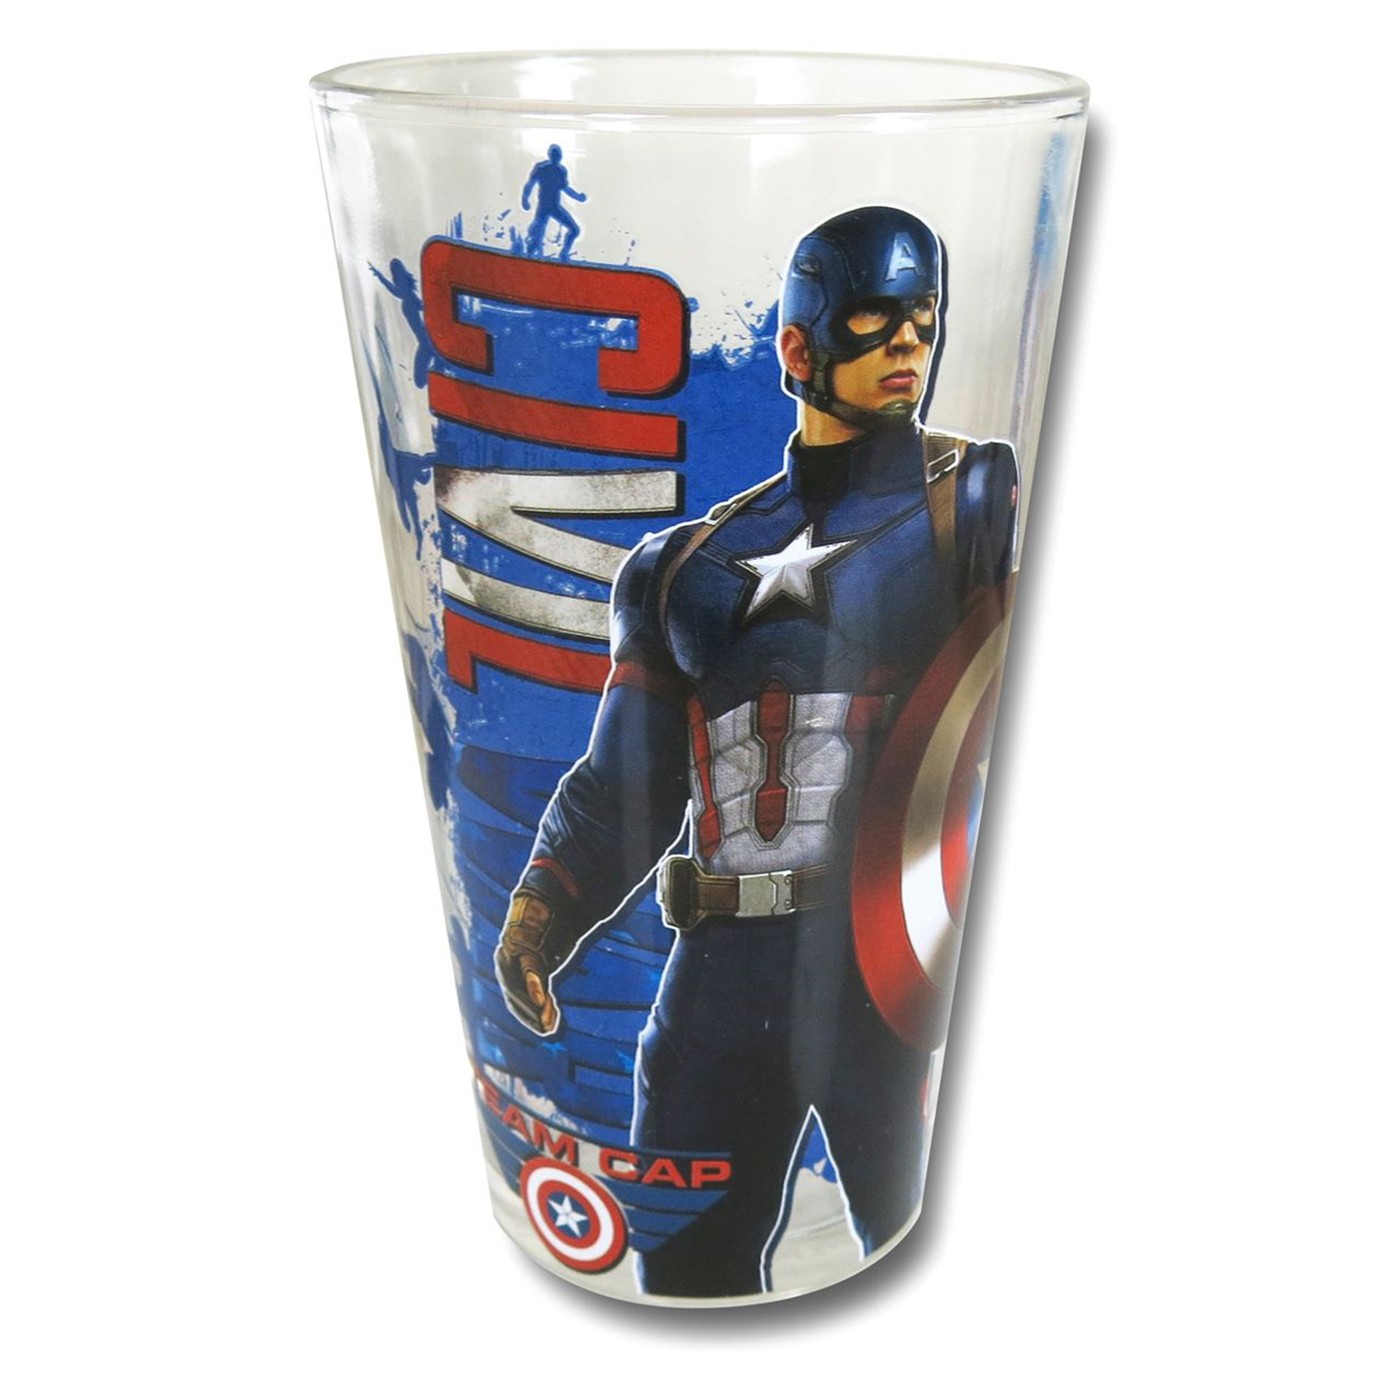 Captain America Civil War 2 Pack Pint Glass